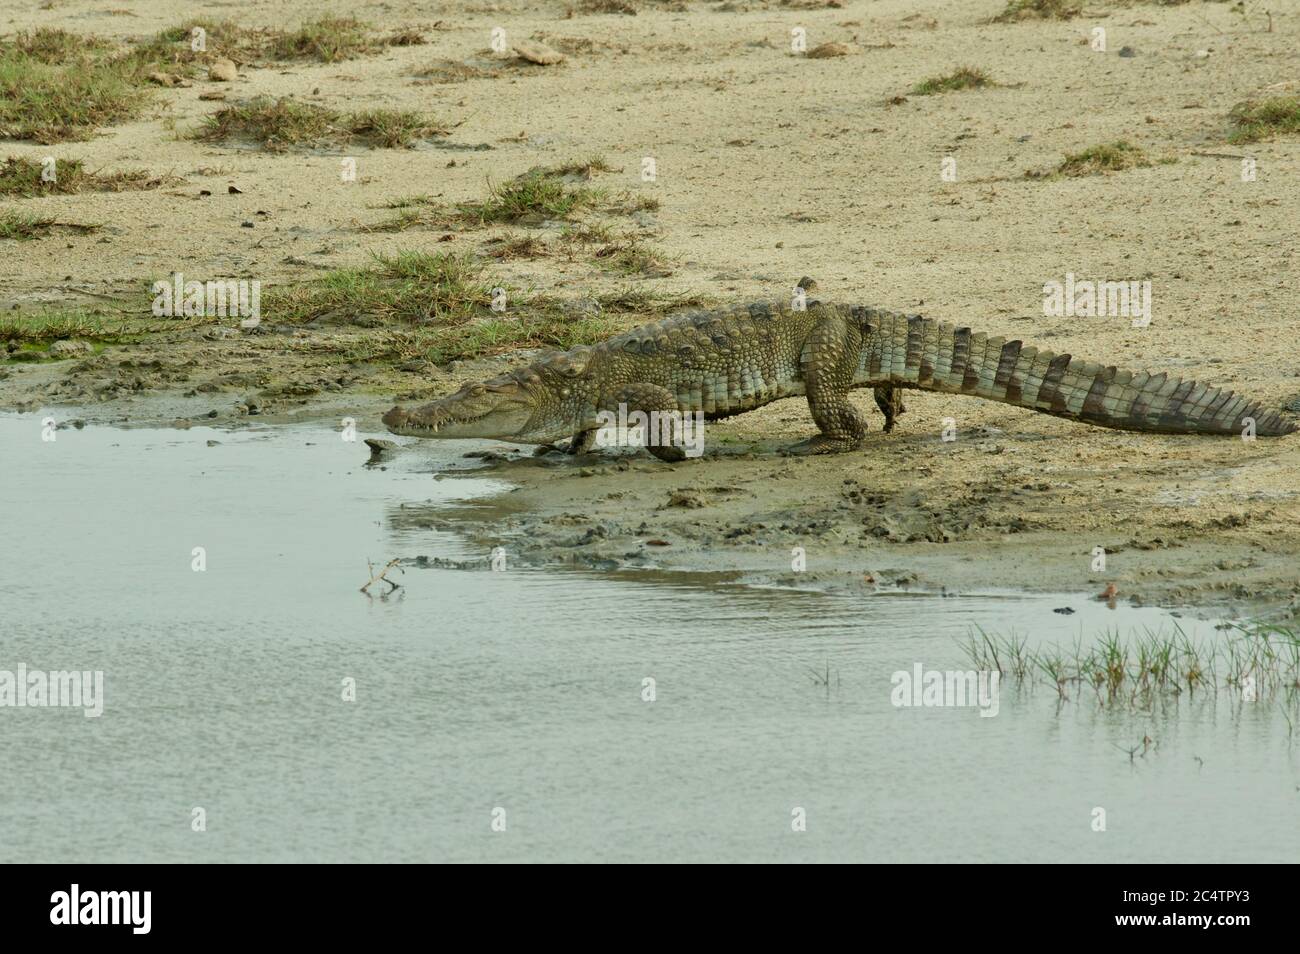 A Mugger Crocodile (Crocodylus palustris) about to enter water in Yala National Park, Sri Lanka Stock Photo